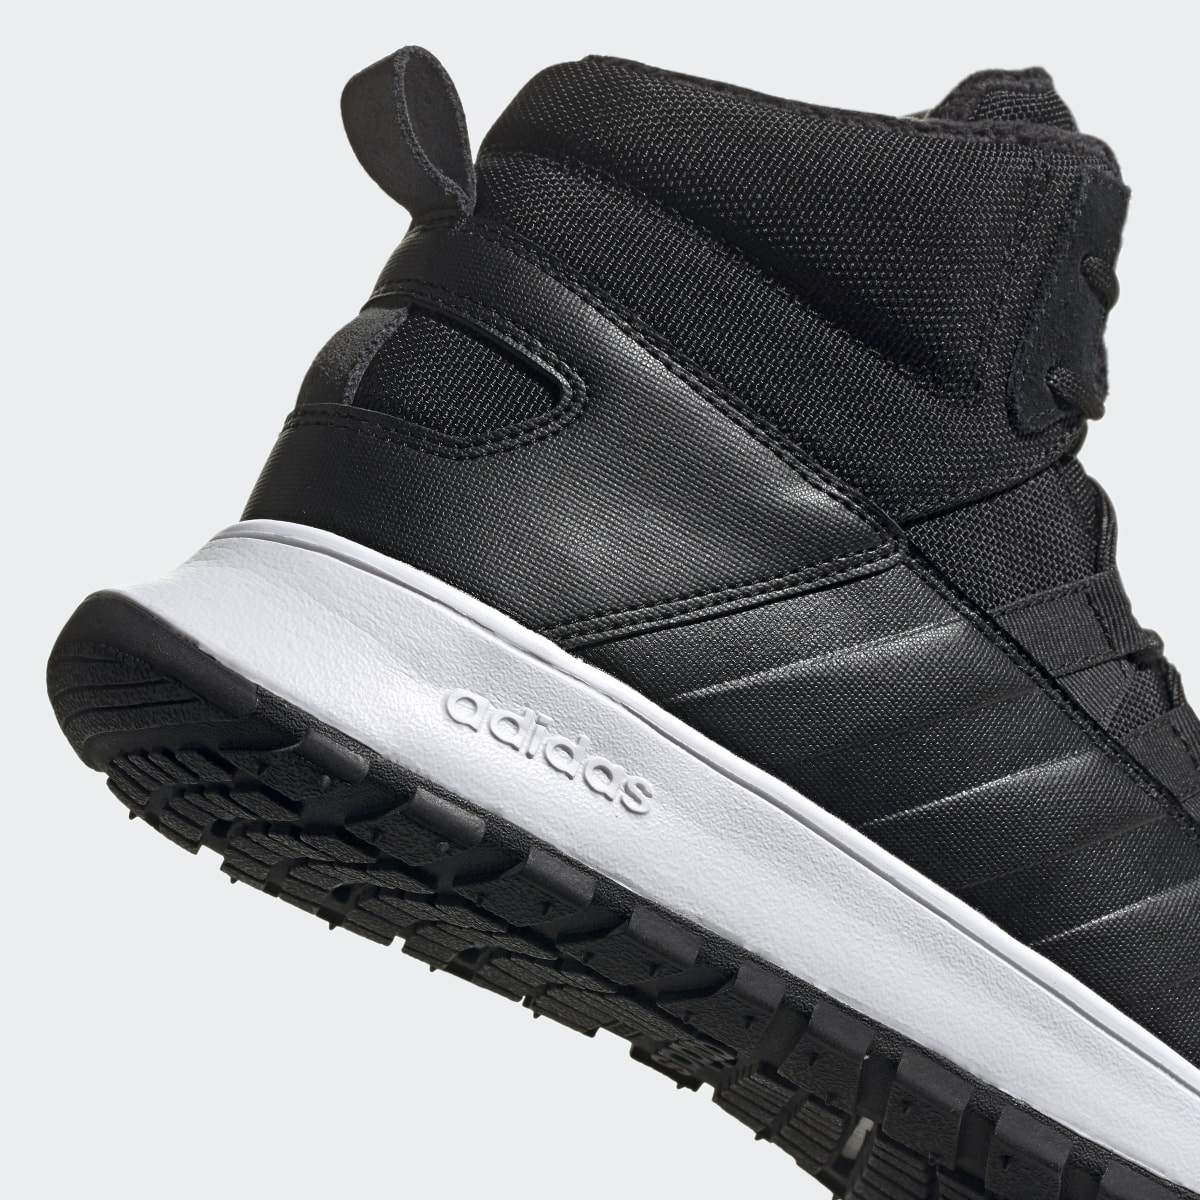 Adidas Fusion Winter Boots. 9